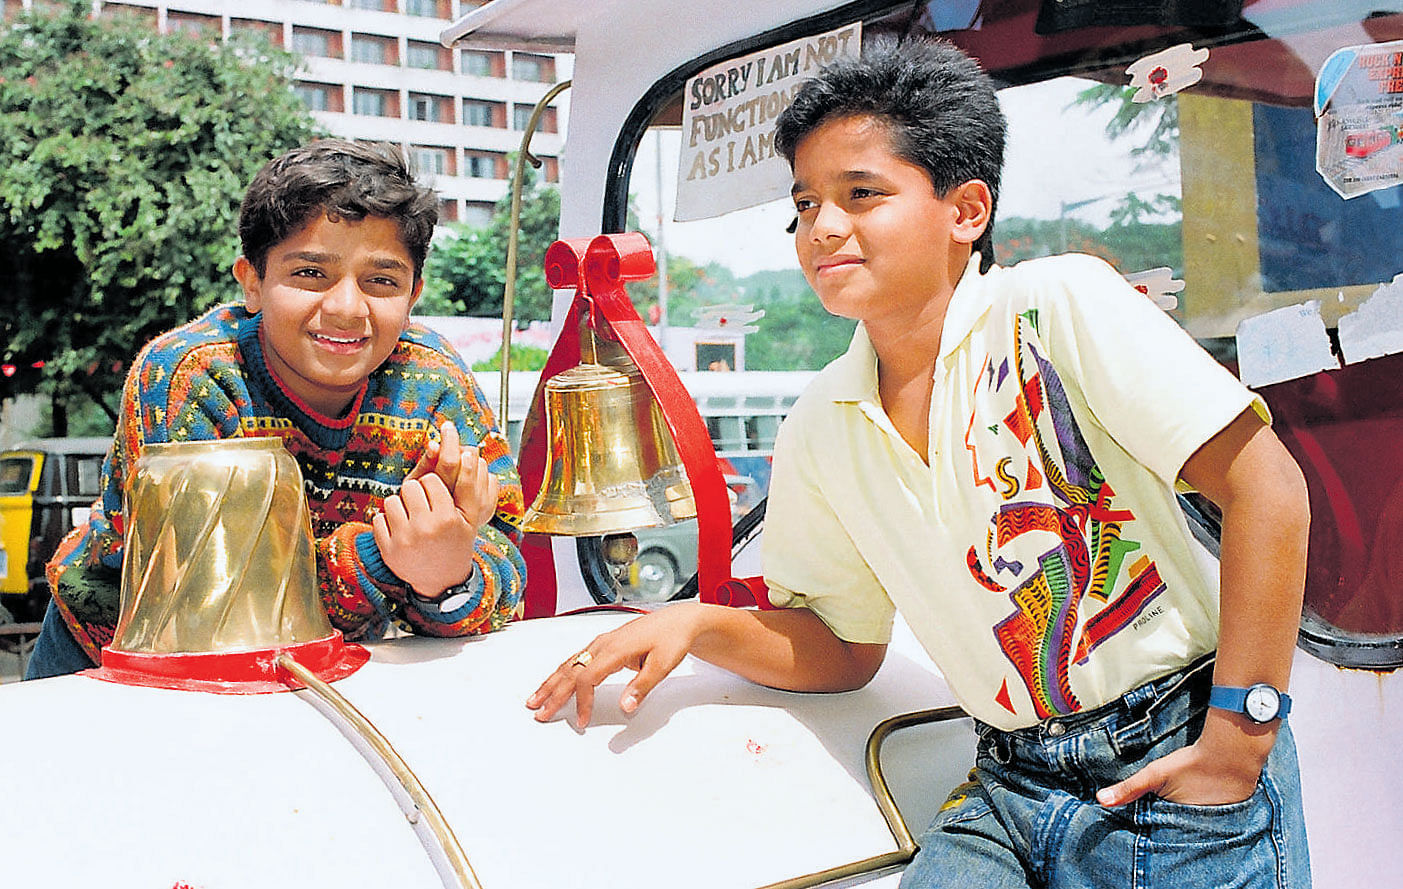 HAPPY DAYS SriiMurali (right) and Vijay Raghavendra. PHOTO CREDIT: D C NAGESH